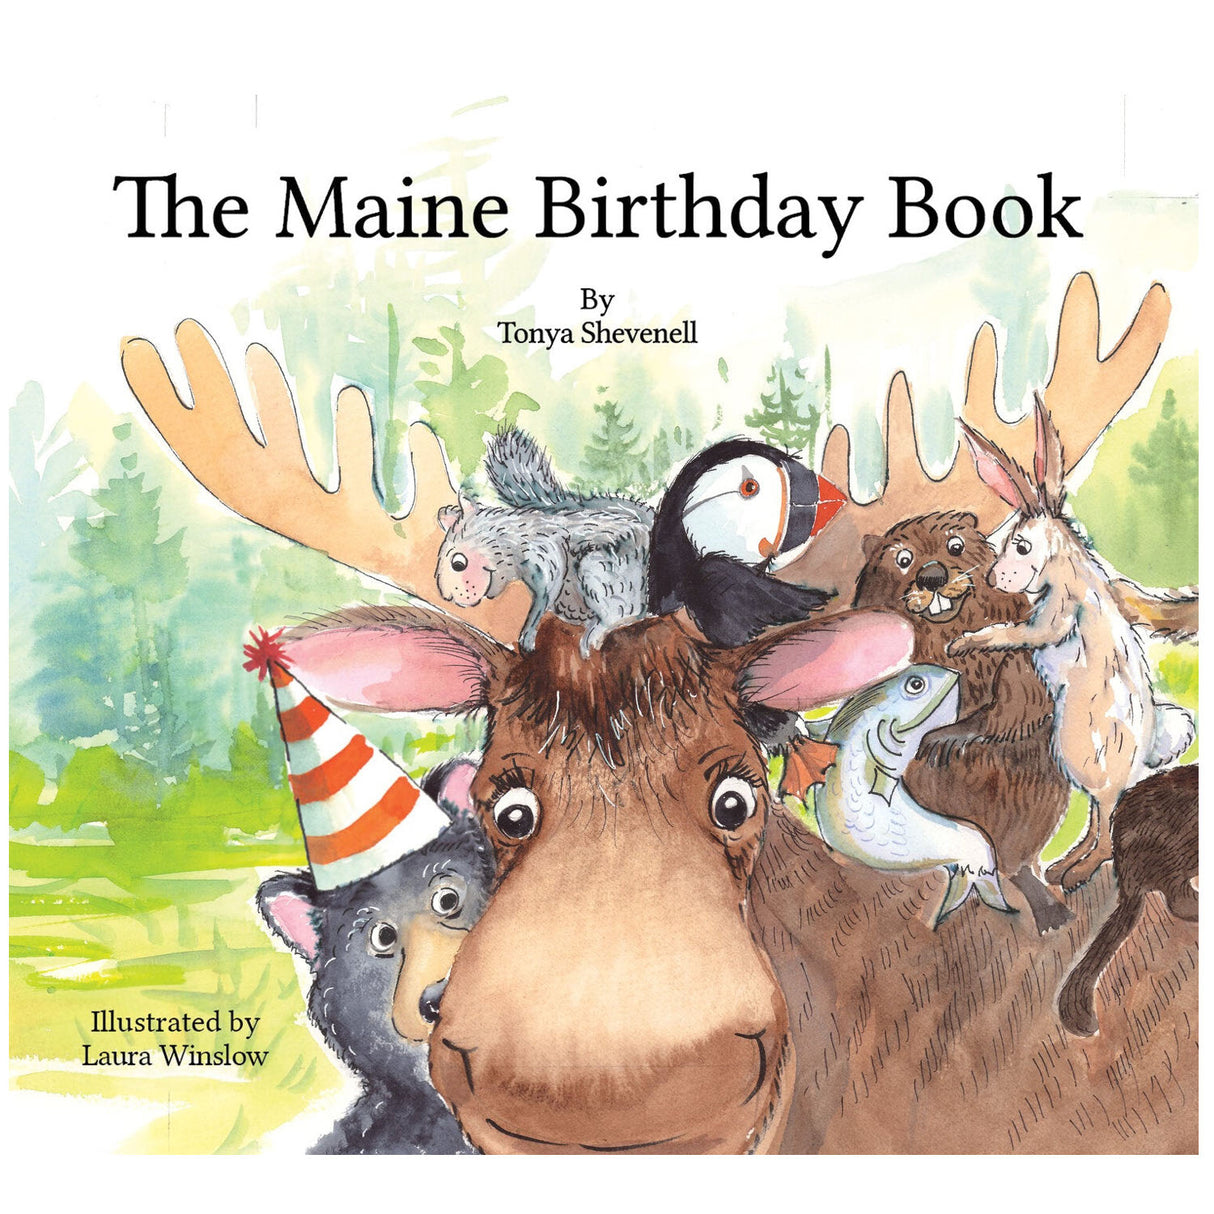 The Maine Birthday Book